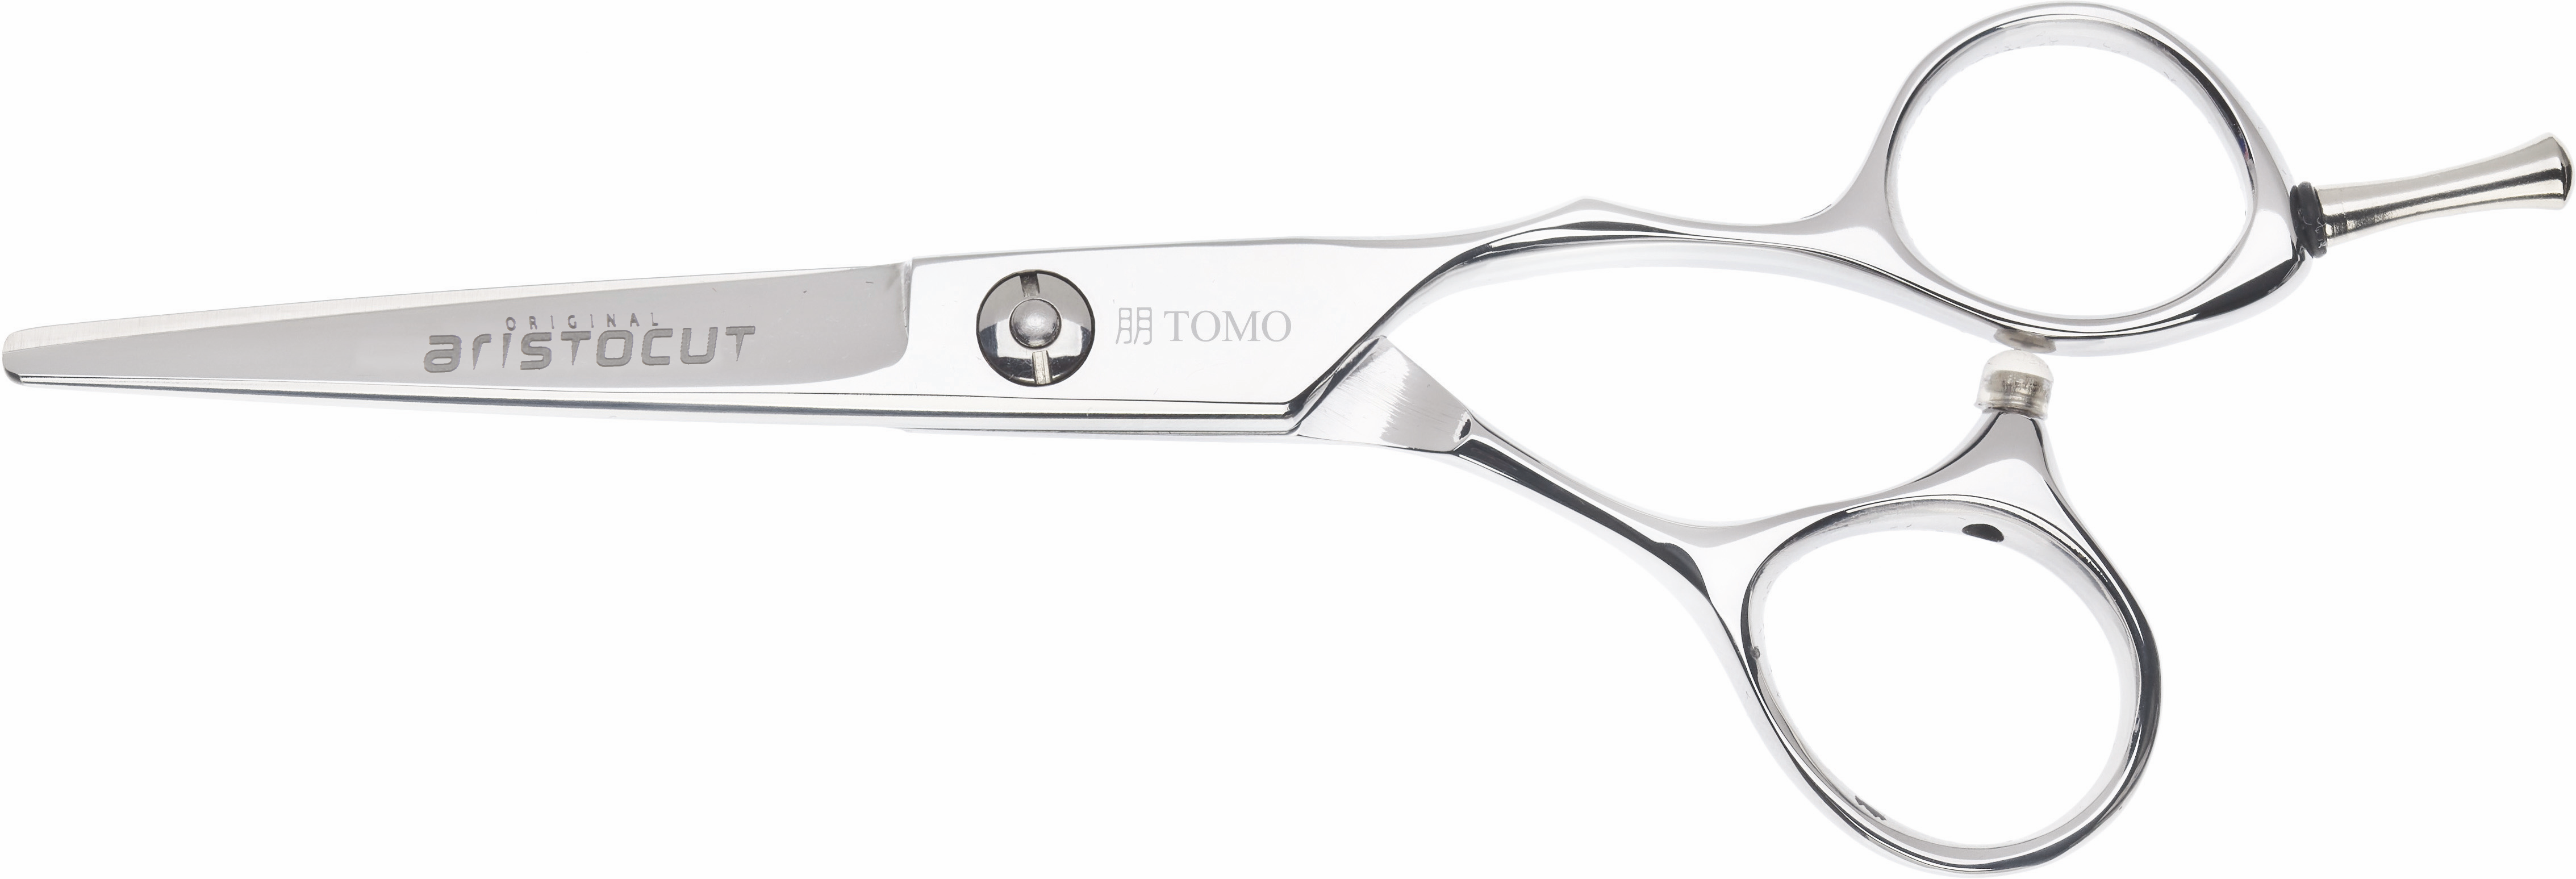 TOMO Hair cutting scissors